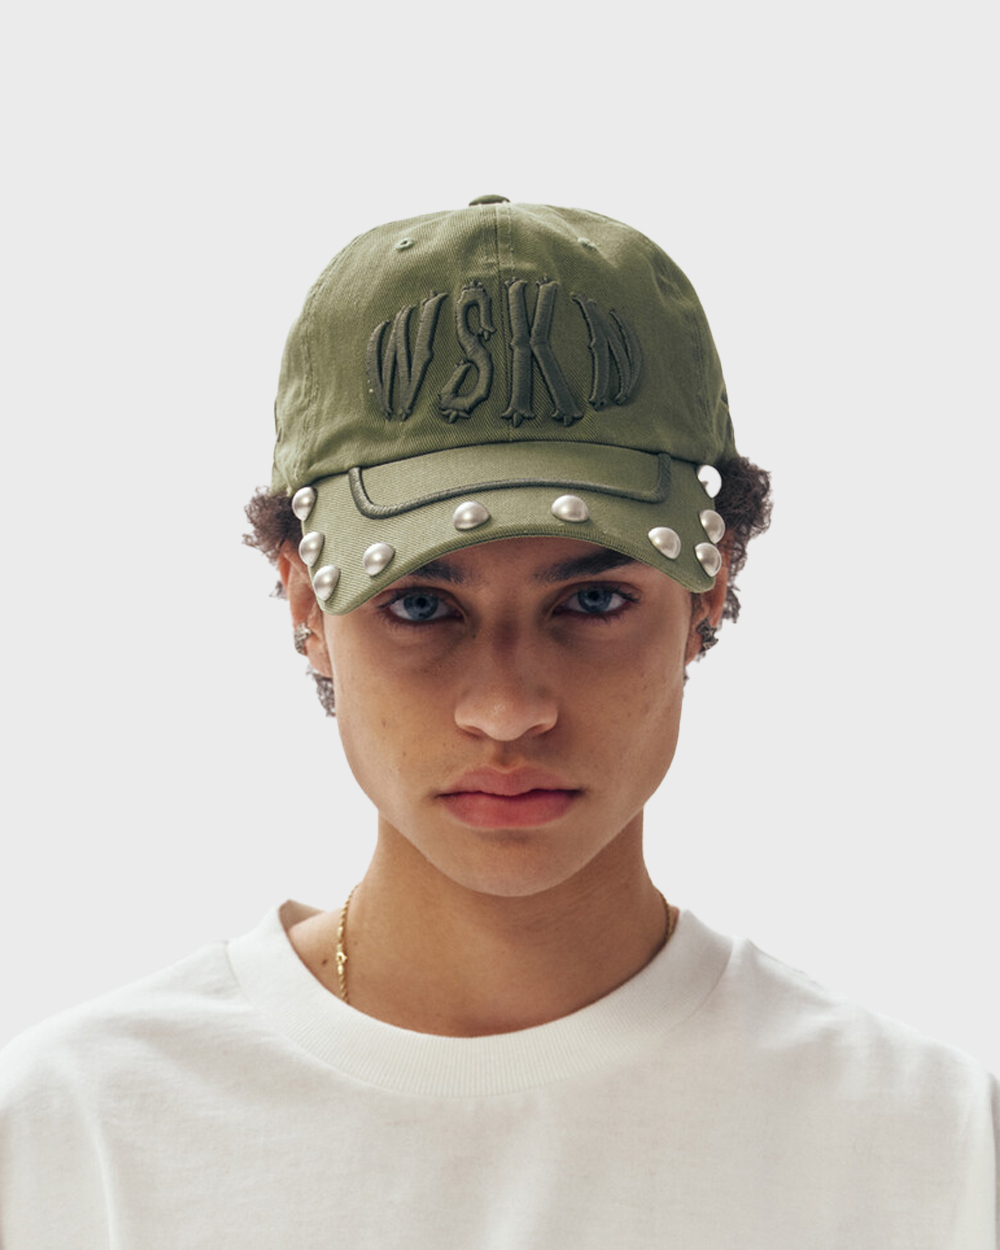 WSKN Embroidered Stud Cap (Olive)